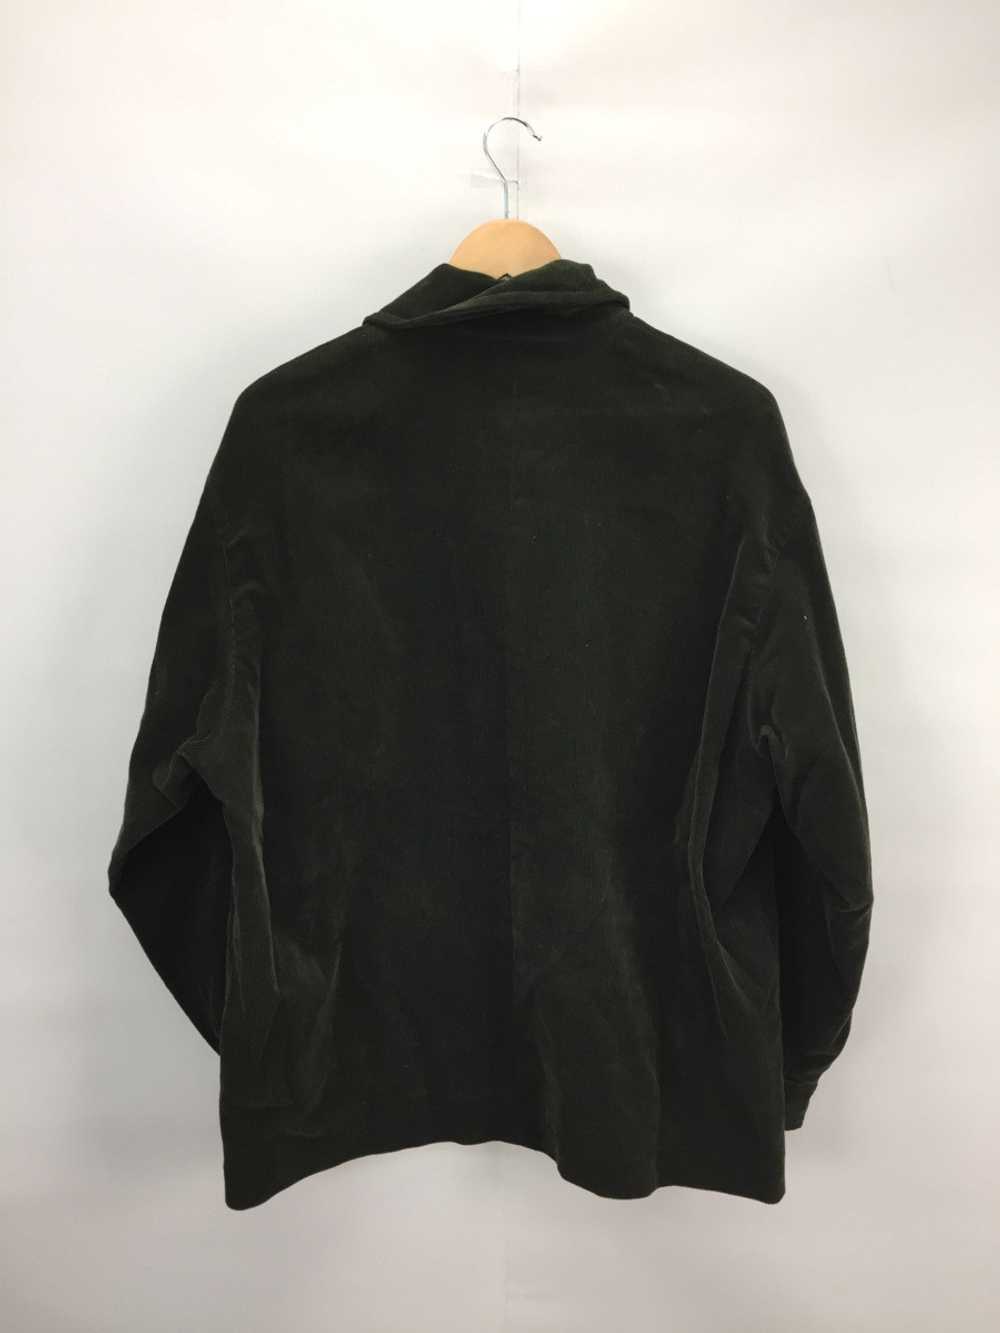 Allege - green corduroy jacket - image 5